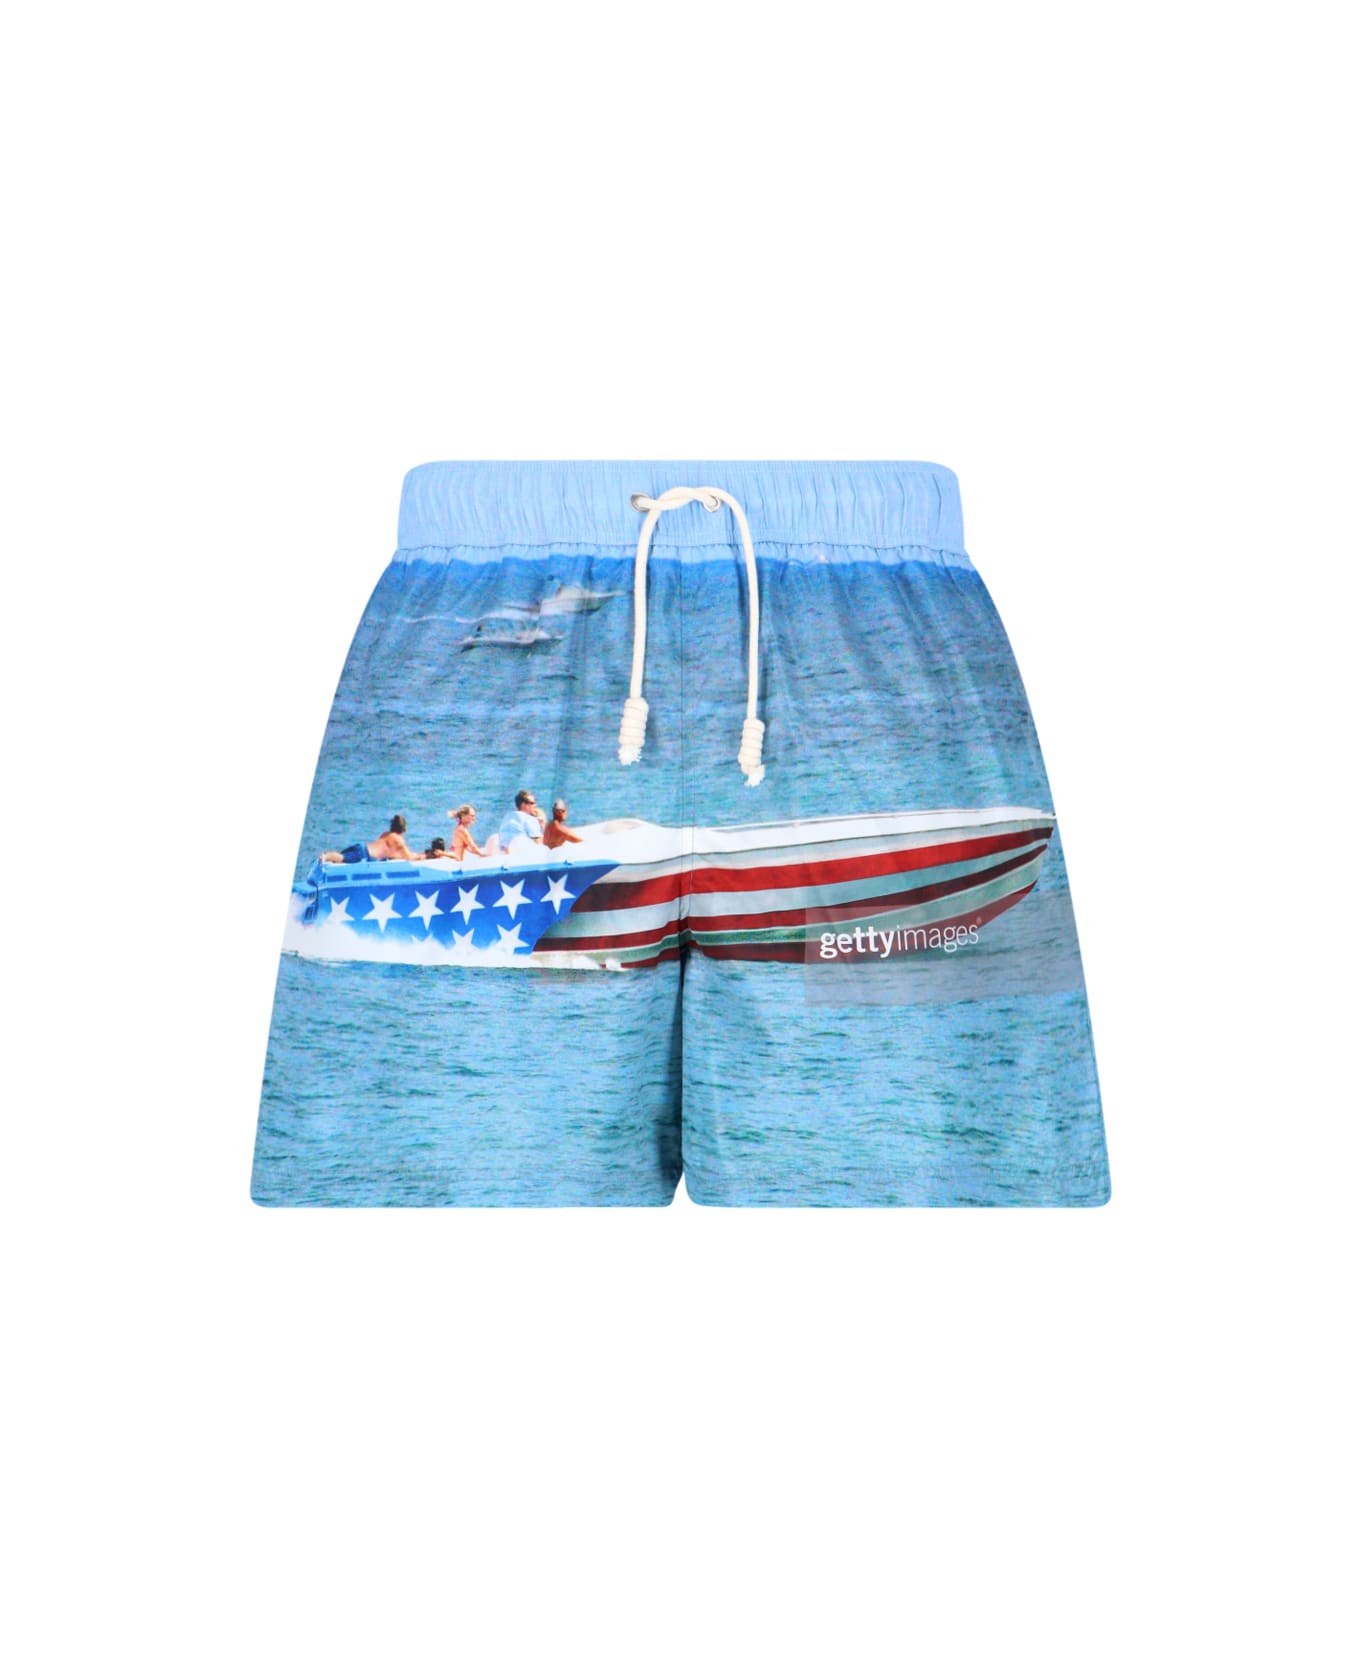 Palm Angels Getty Speedyboat Swim Shorts - Light blue 水着